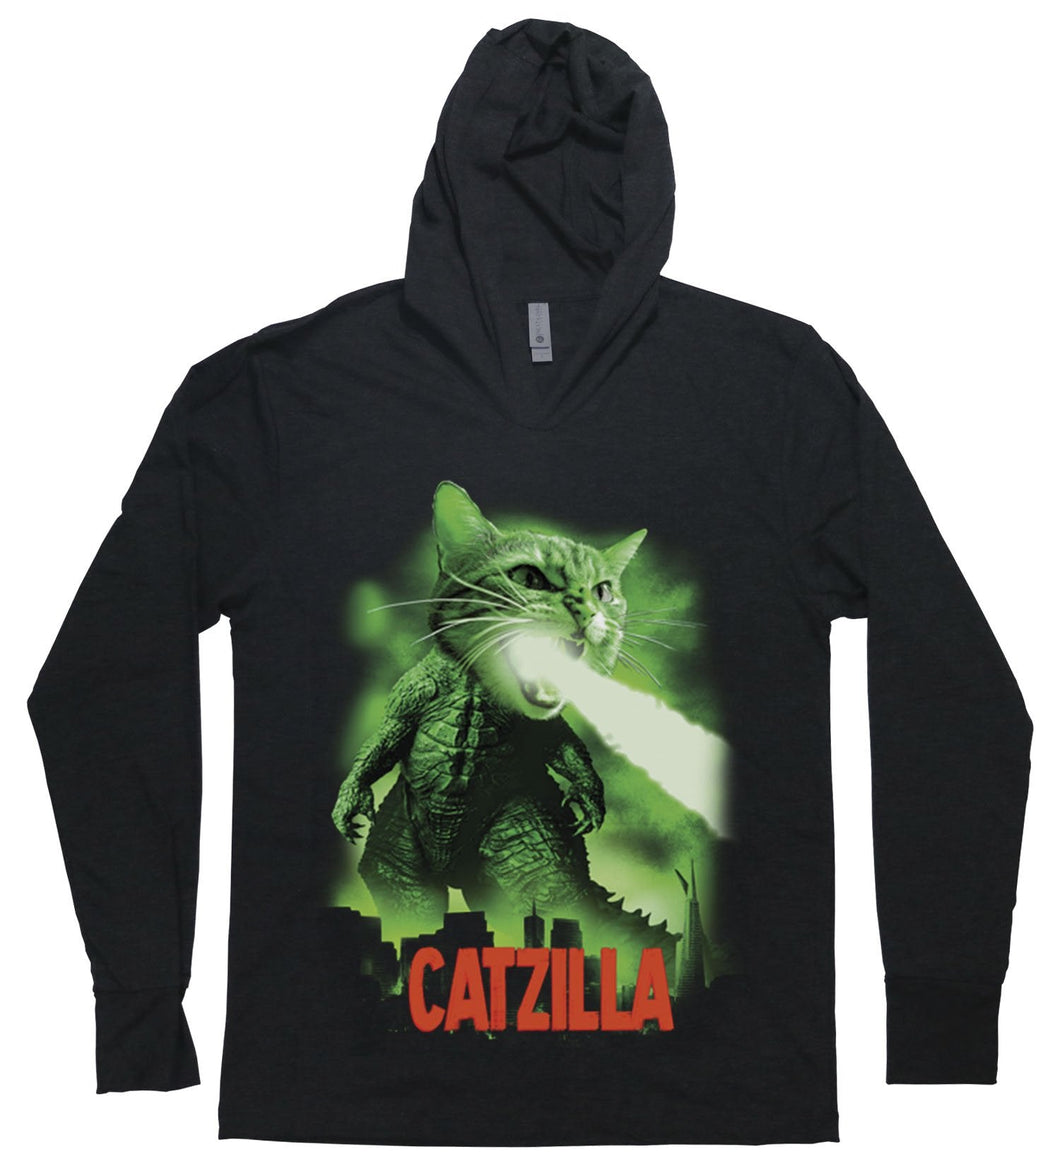 Catzilla - Hooded T-Shirt - Baffle